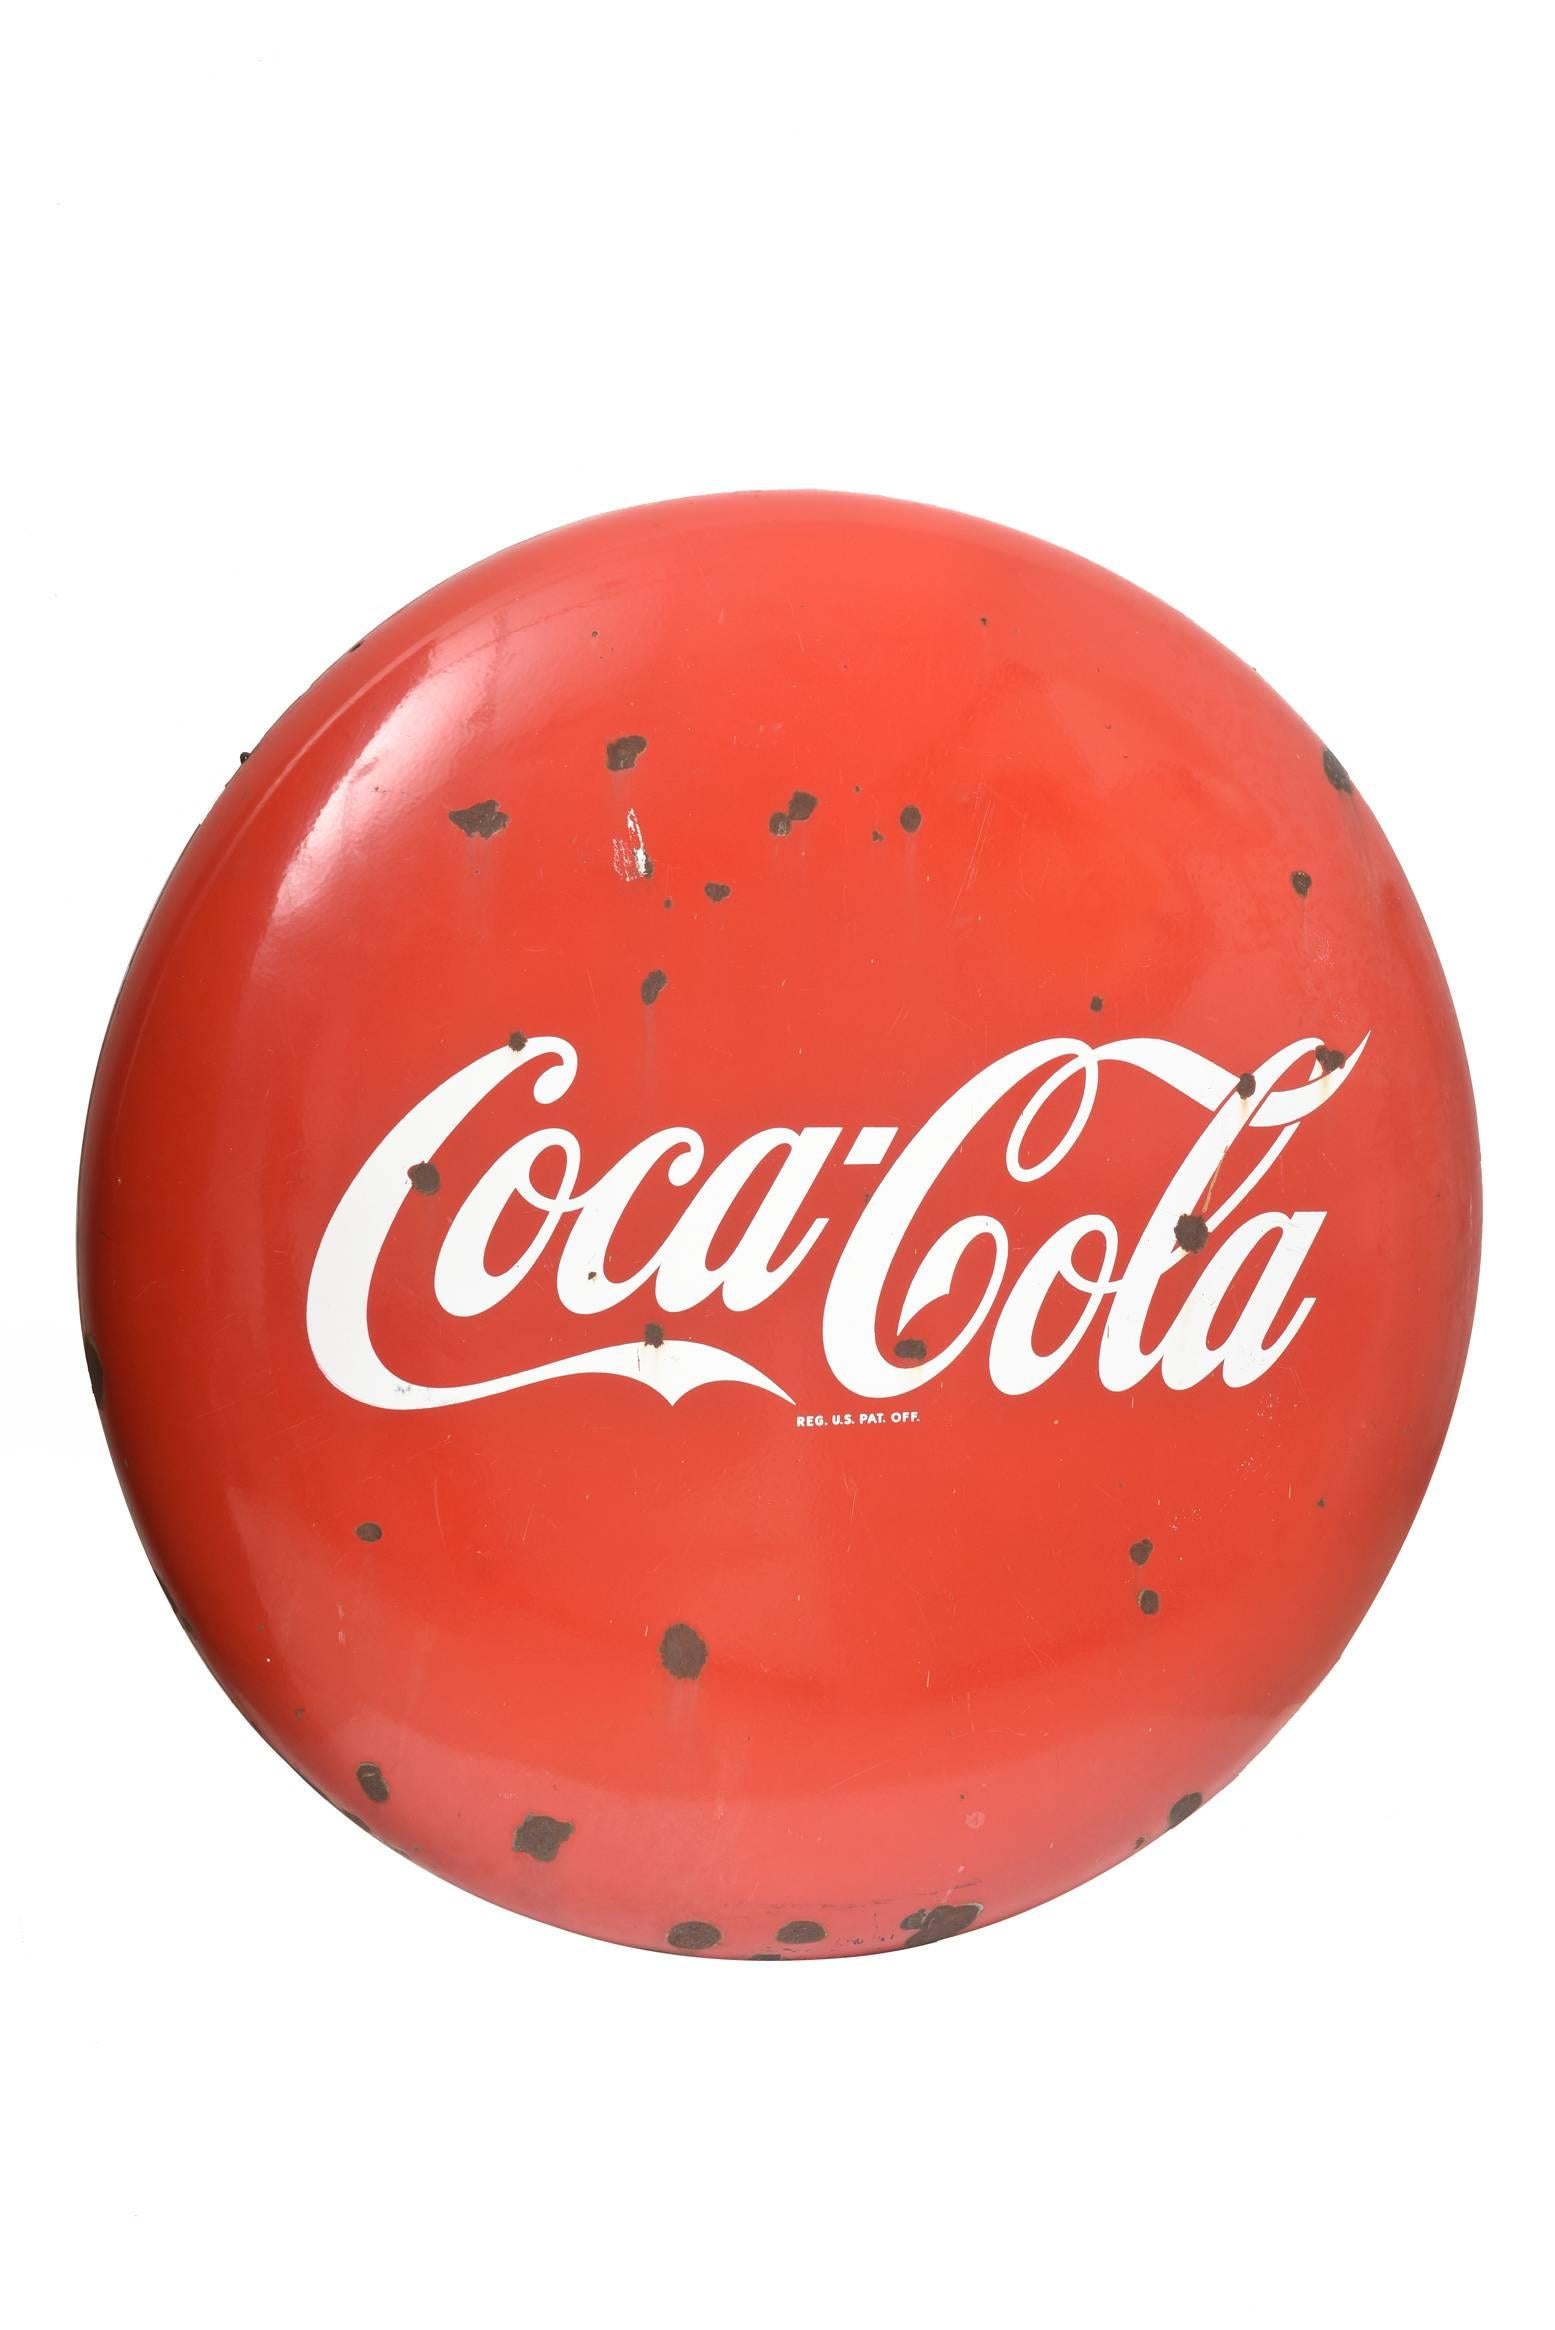 Vintage distressed 1950s mid century Coca-Cola button sign  36